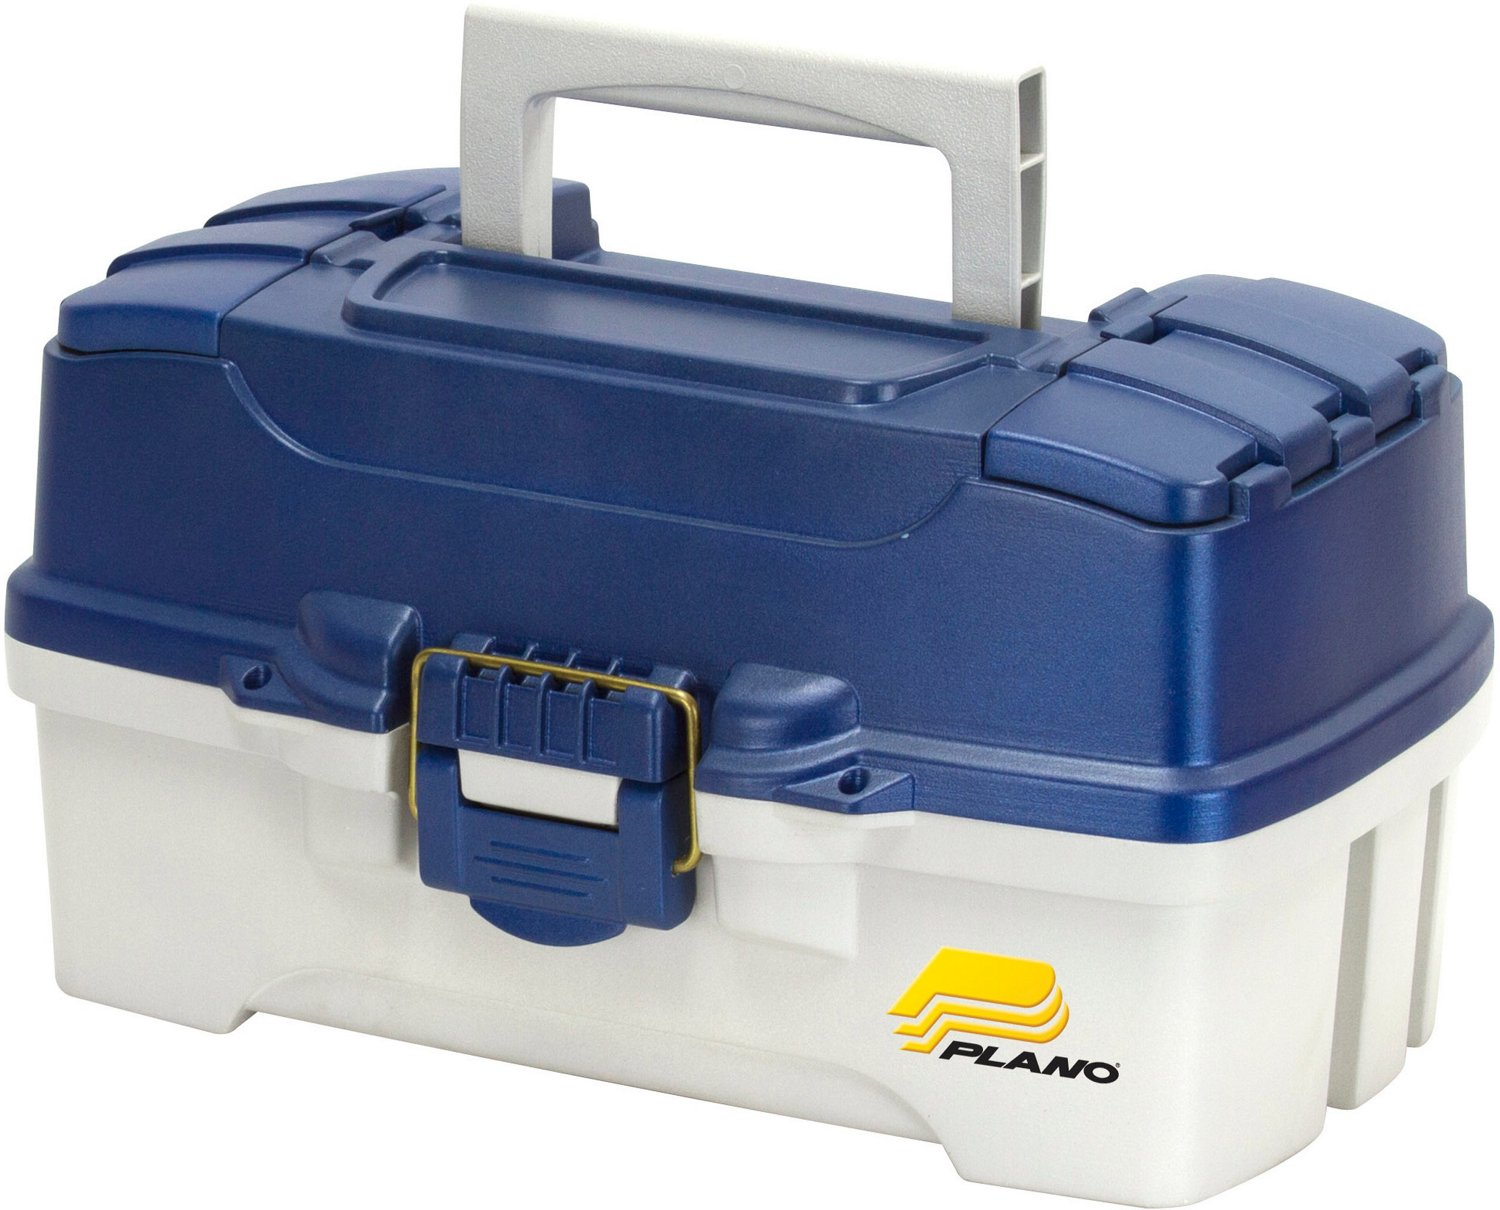 Plano® 2-Tray Tackle Box